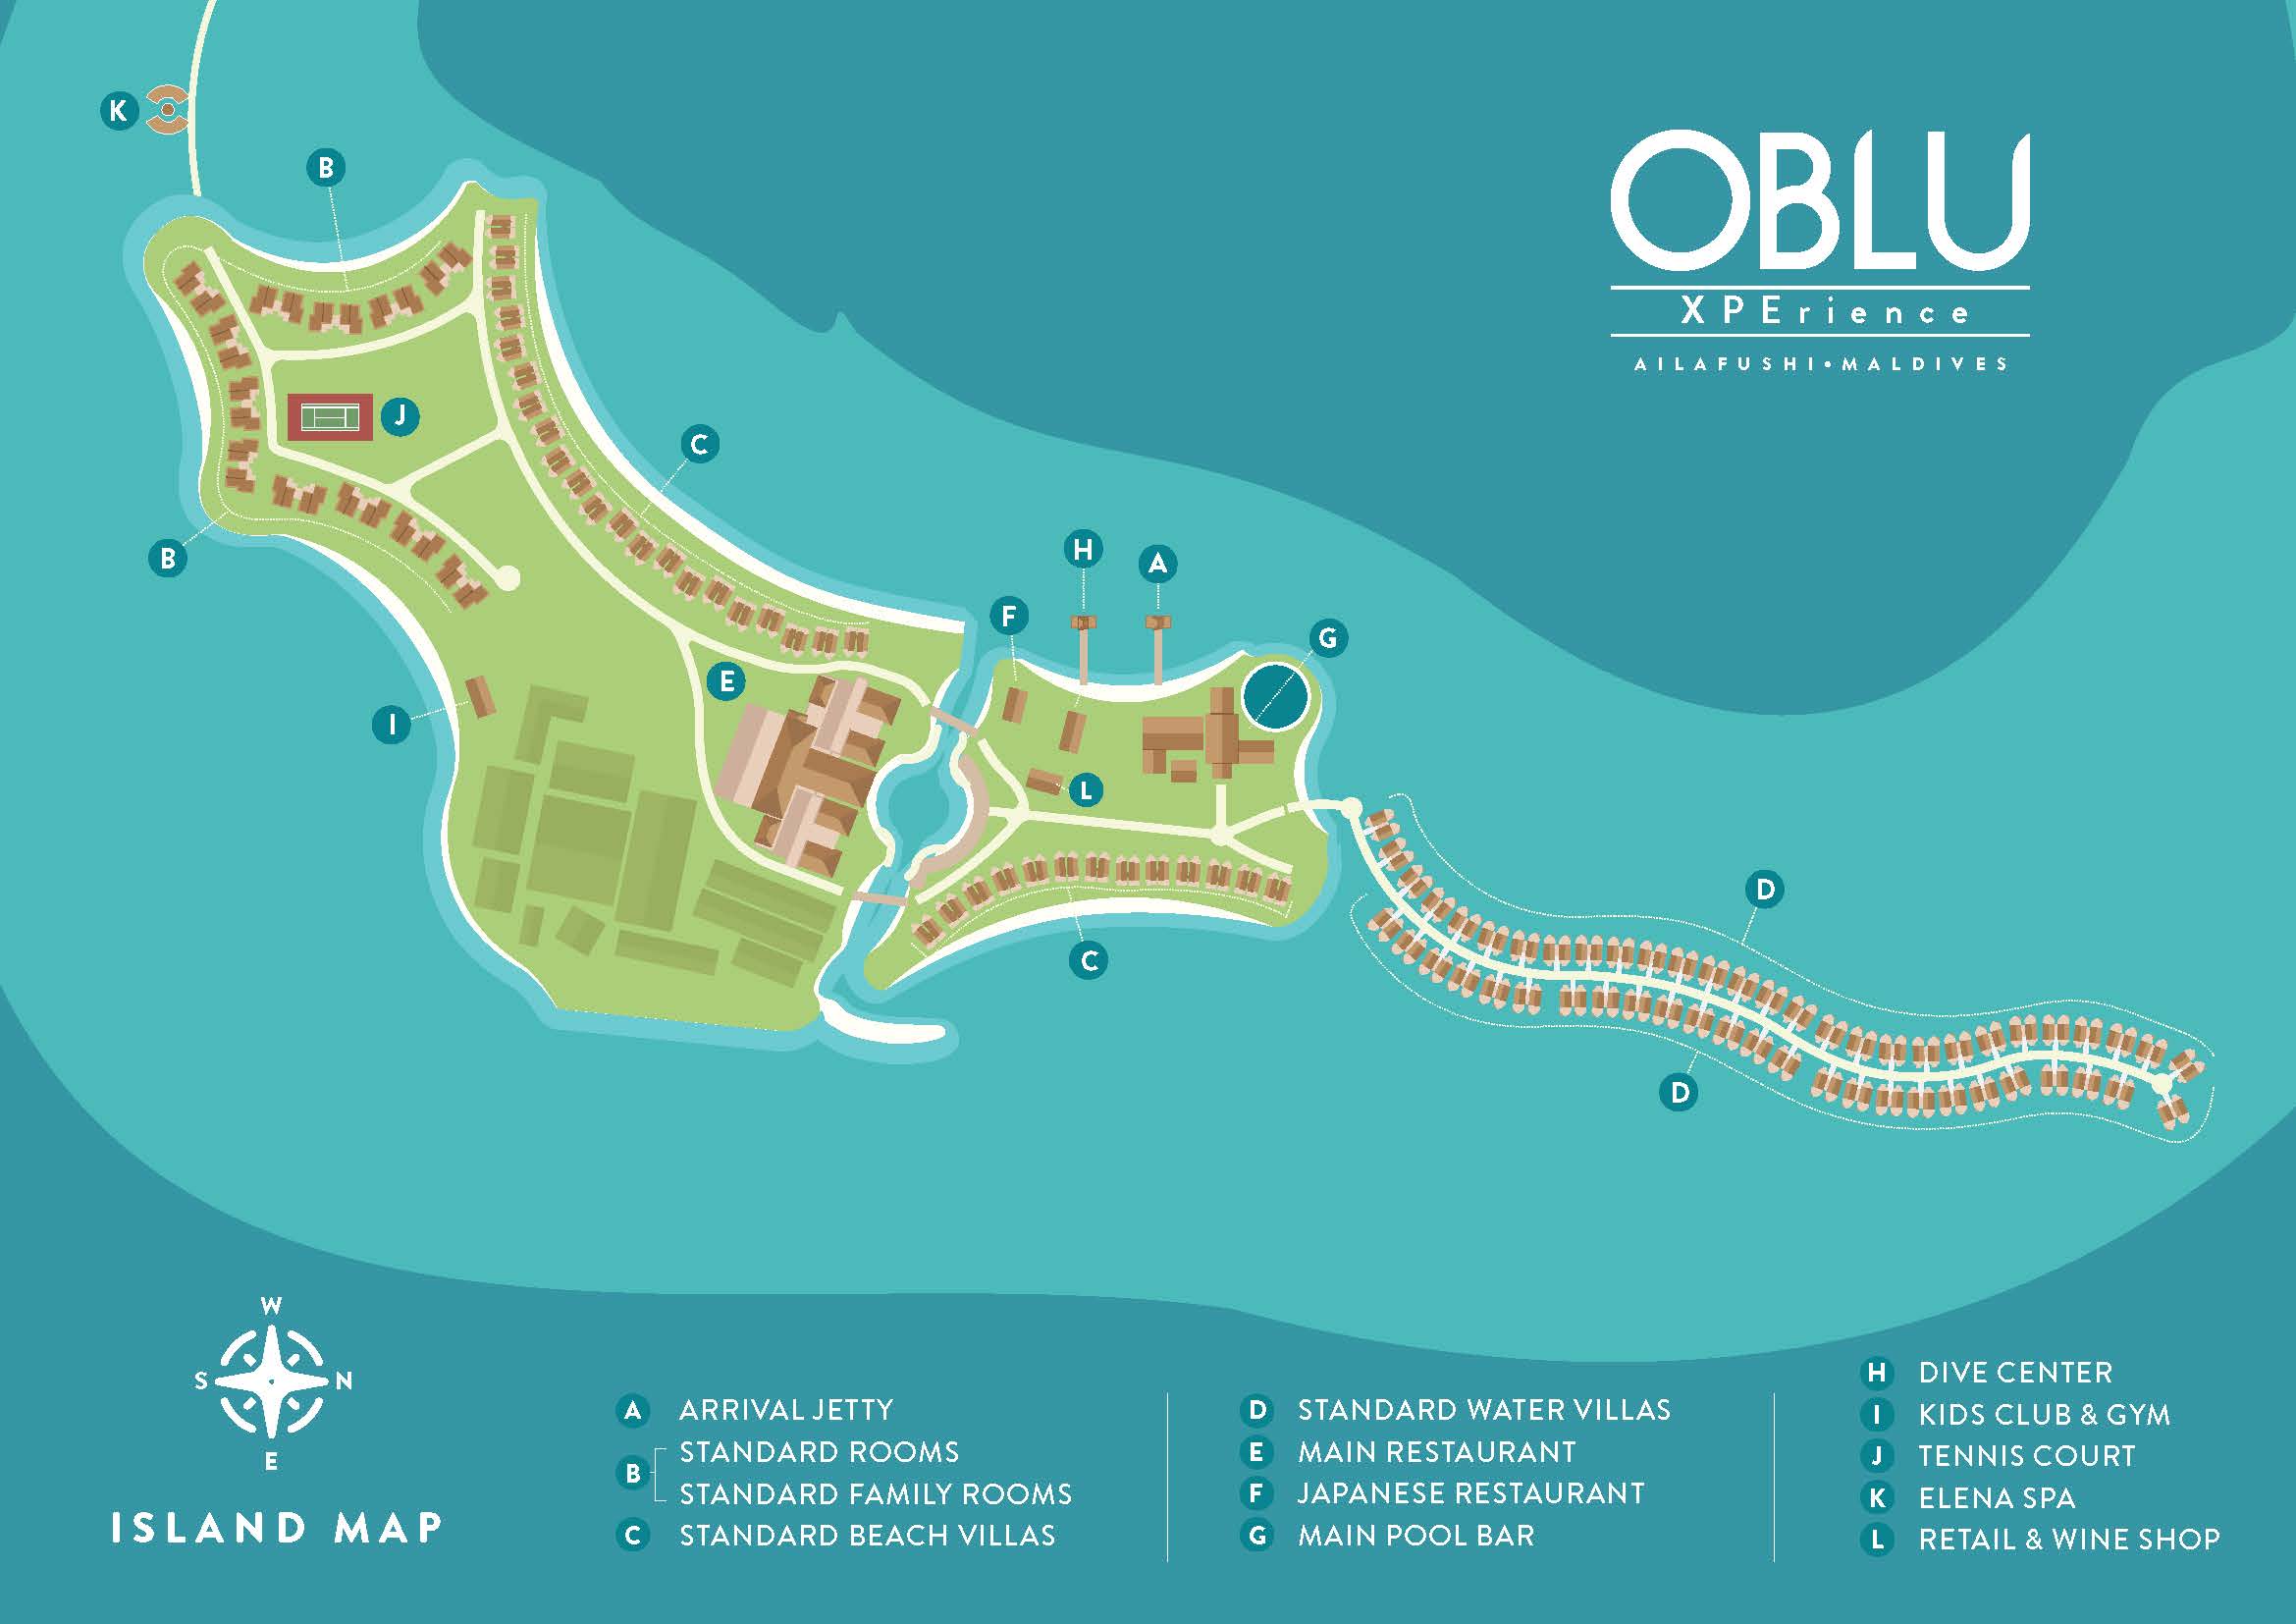 Oblu experience ailafushi. Vilamendhoo Island Resort карта отеля. OBLU Xperience ailafushi 4. OBLU ailafushi. Отель Мальдивы OBLU Xperience.